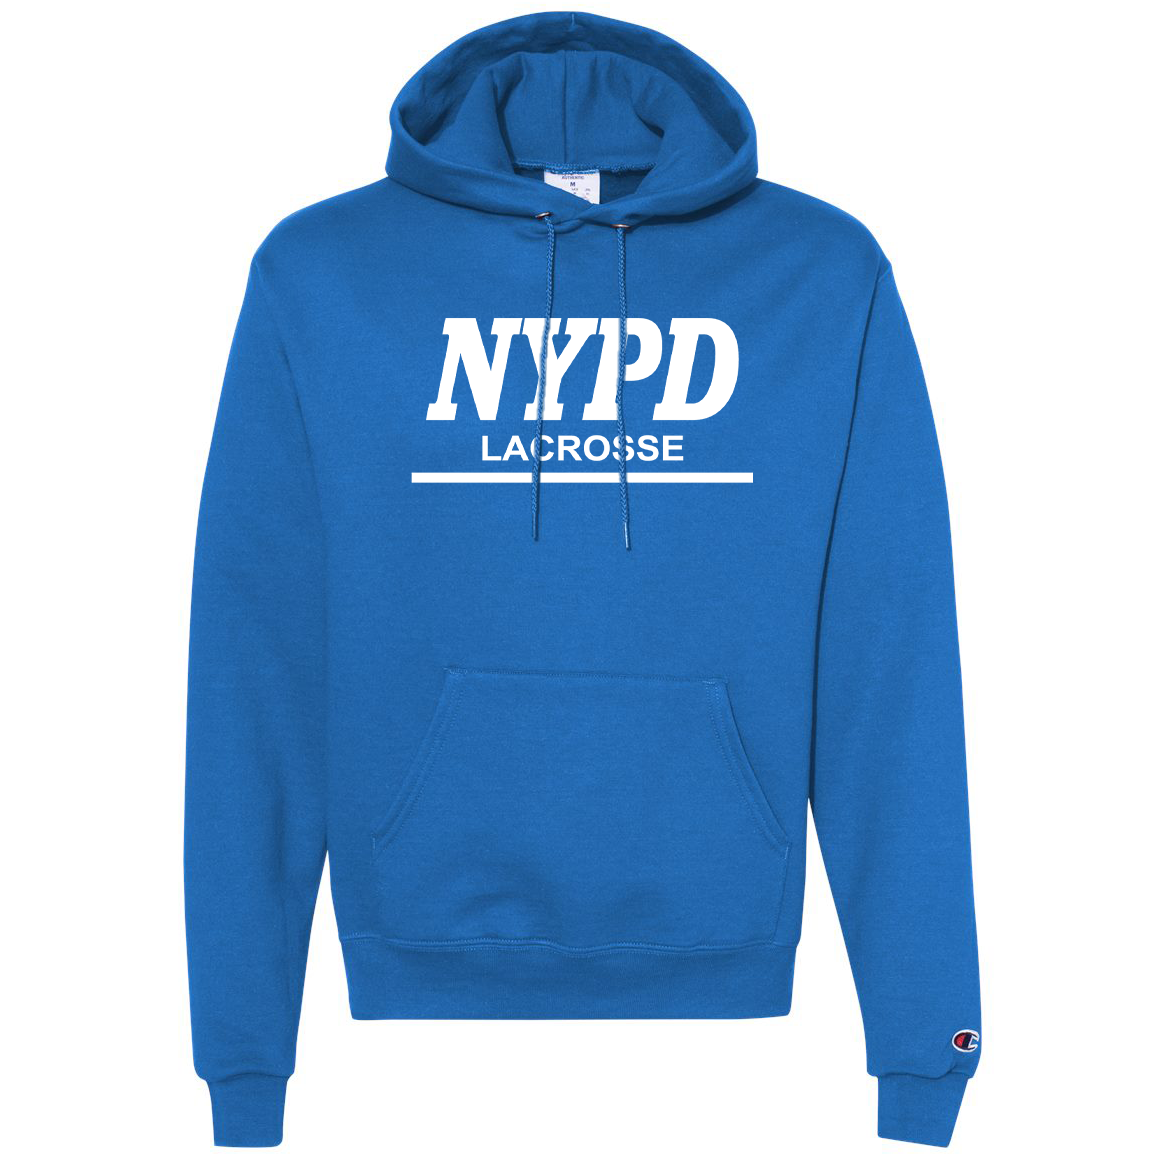 NYPD Lacrosse Champion Sweatshirt